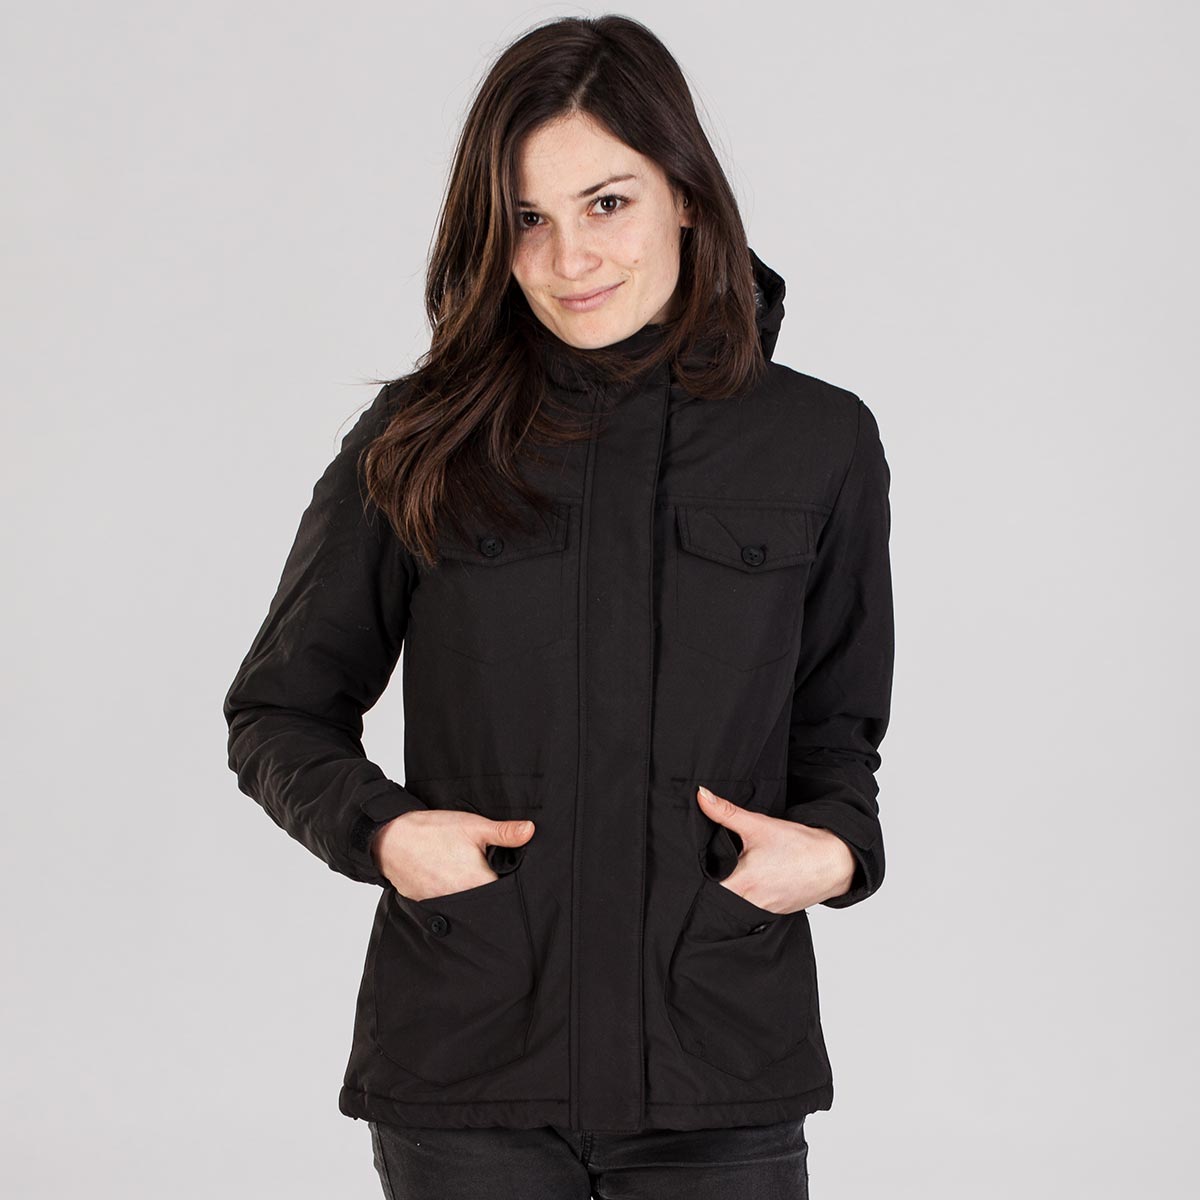 Le Monde Jacket - Women´s water resistant jacket